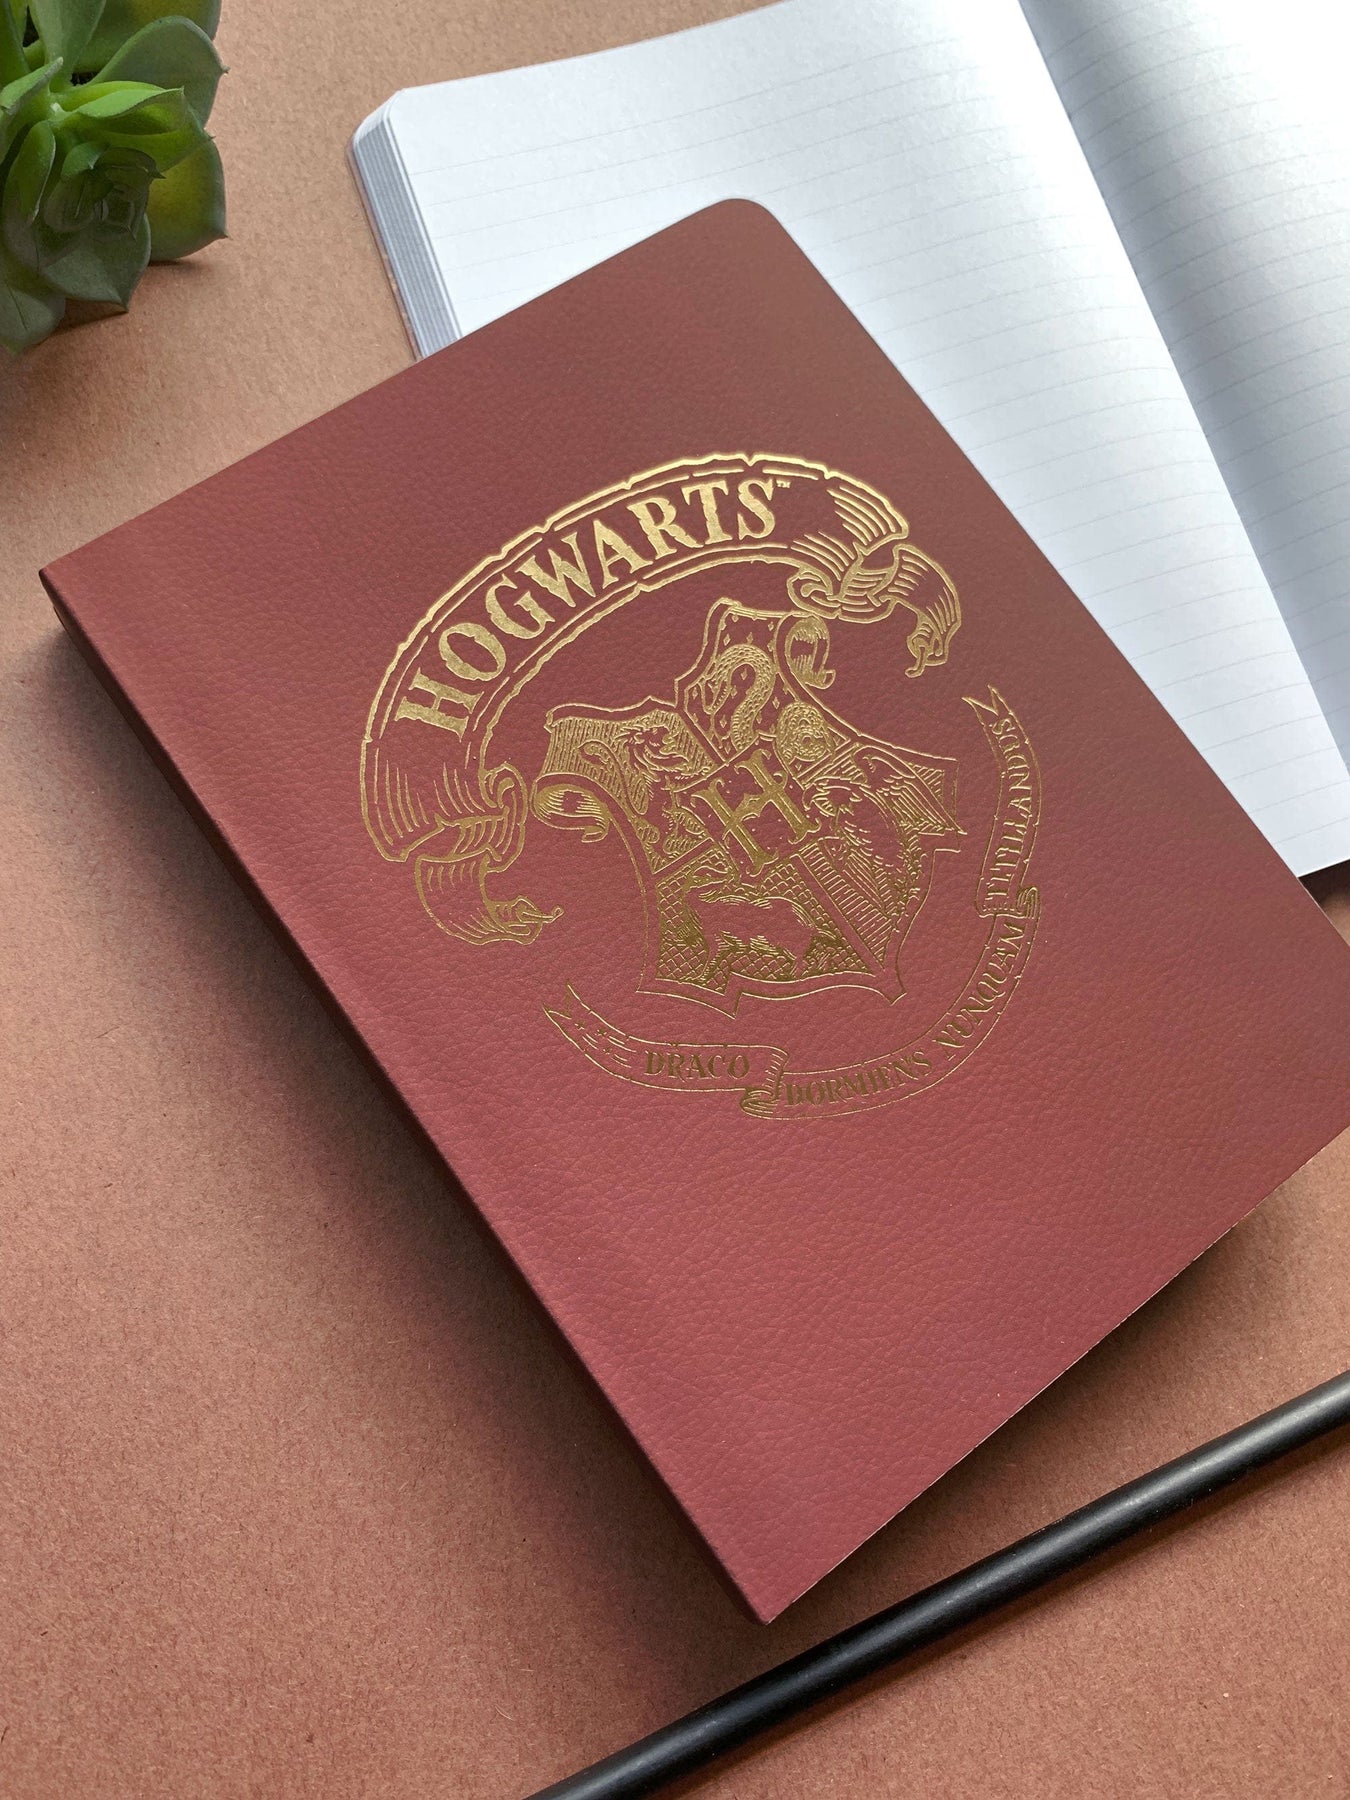 Harry Potter Hogwarts Crest Softcover Lined Journal -Notebook